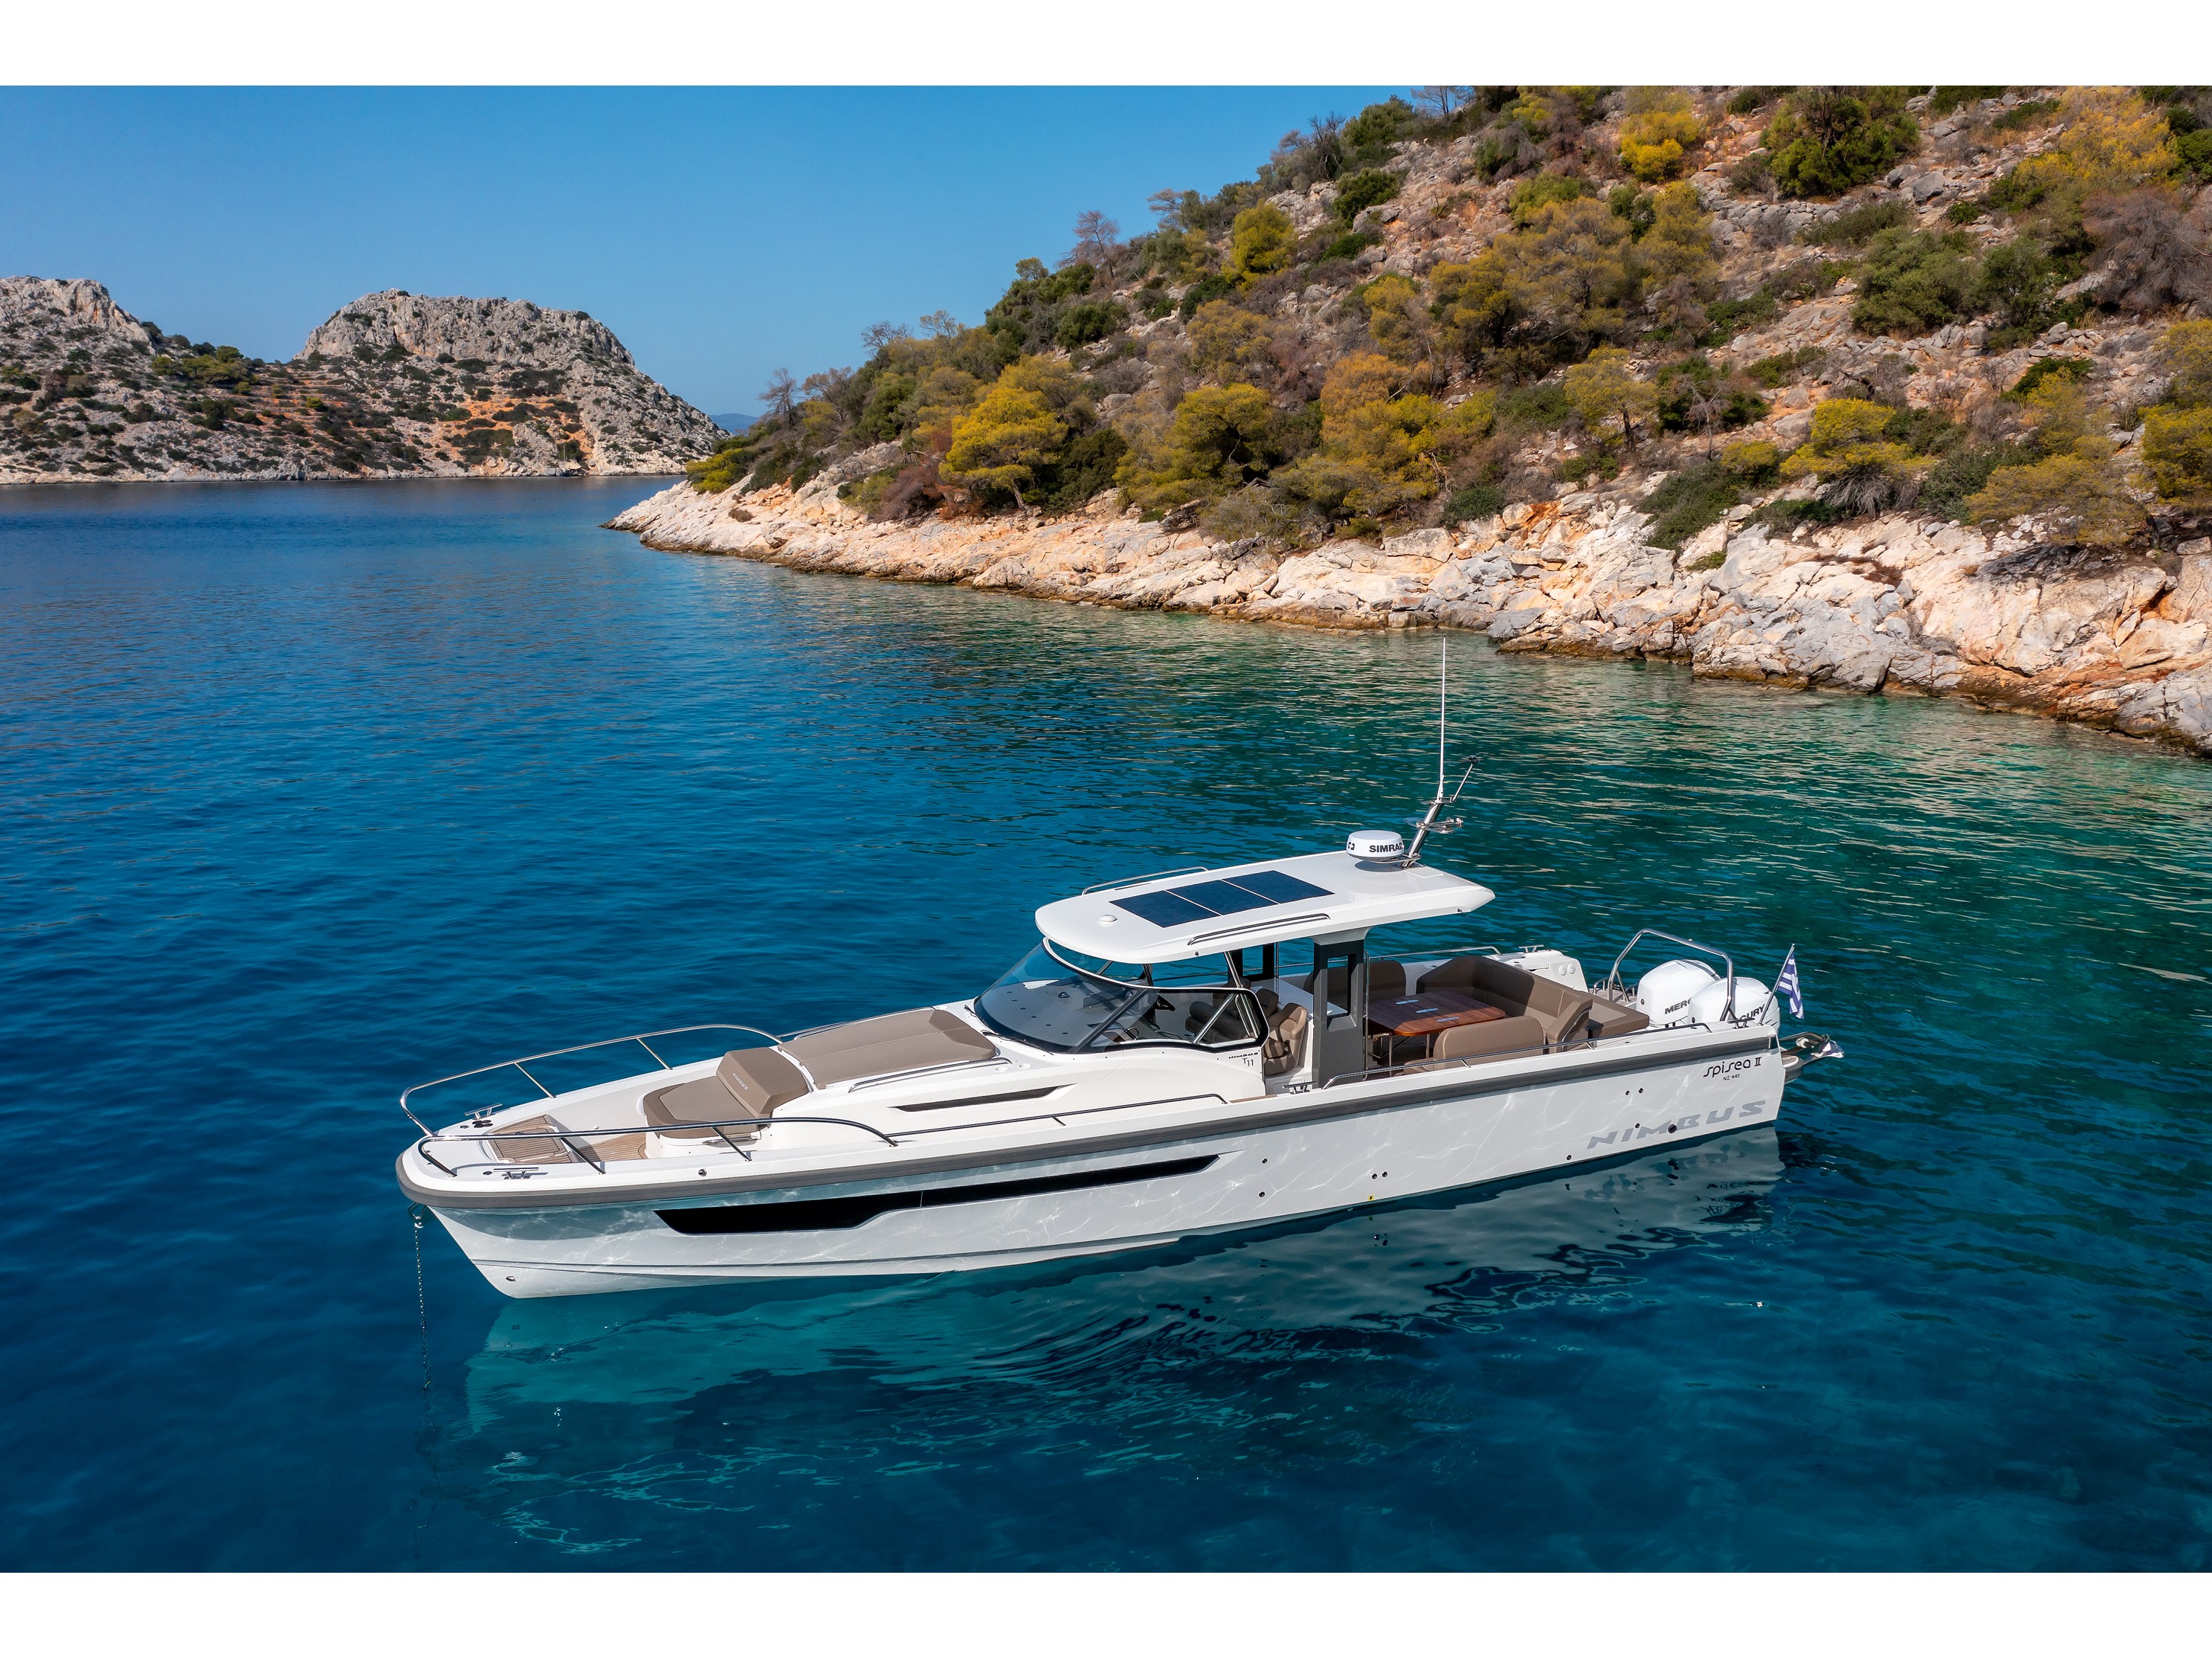 Nimbus Tender T11 - Gulet charter Greece & Boat hire in Greece Athens and Saronic Gulf Athens Hellinikon Agios Kosmas Marina 1